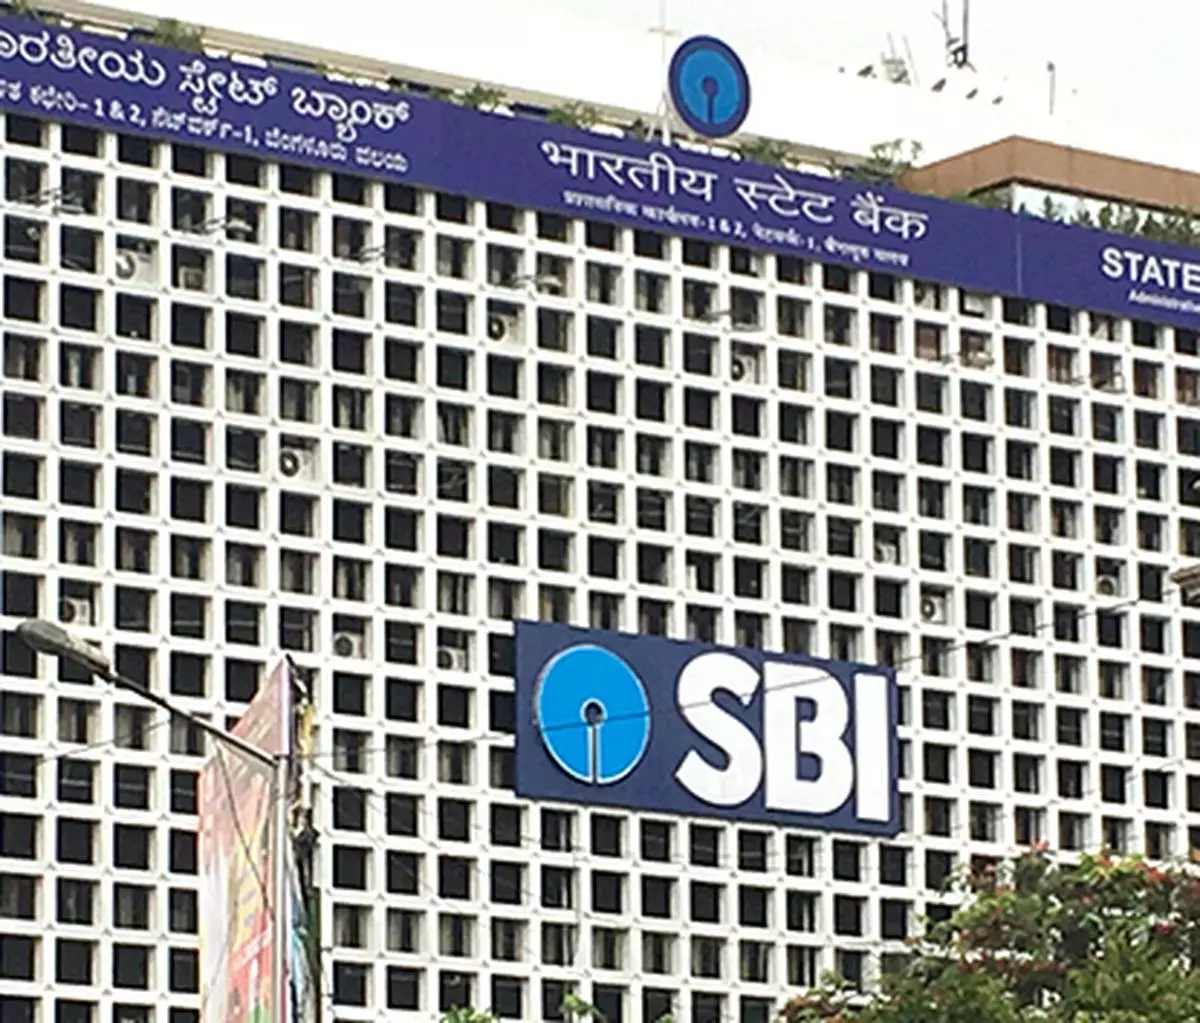 Sbi Sharply Hikes Term Deposit Rates The Hindu Businessline 0832